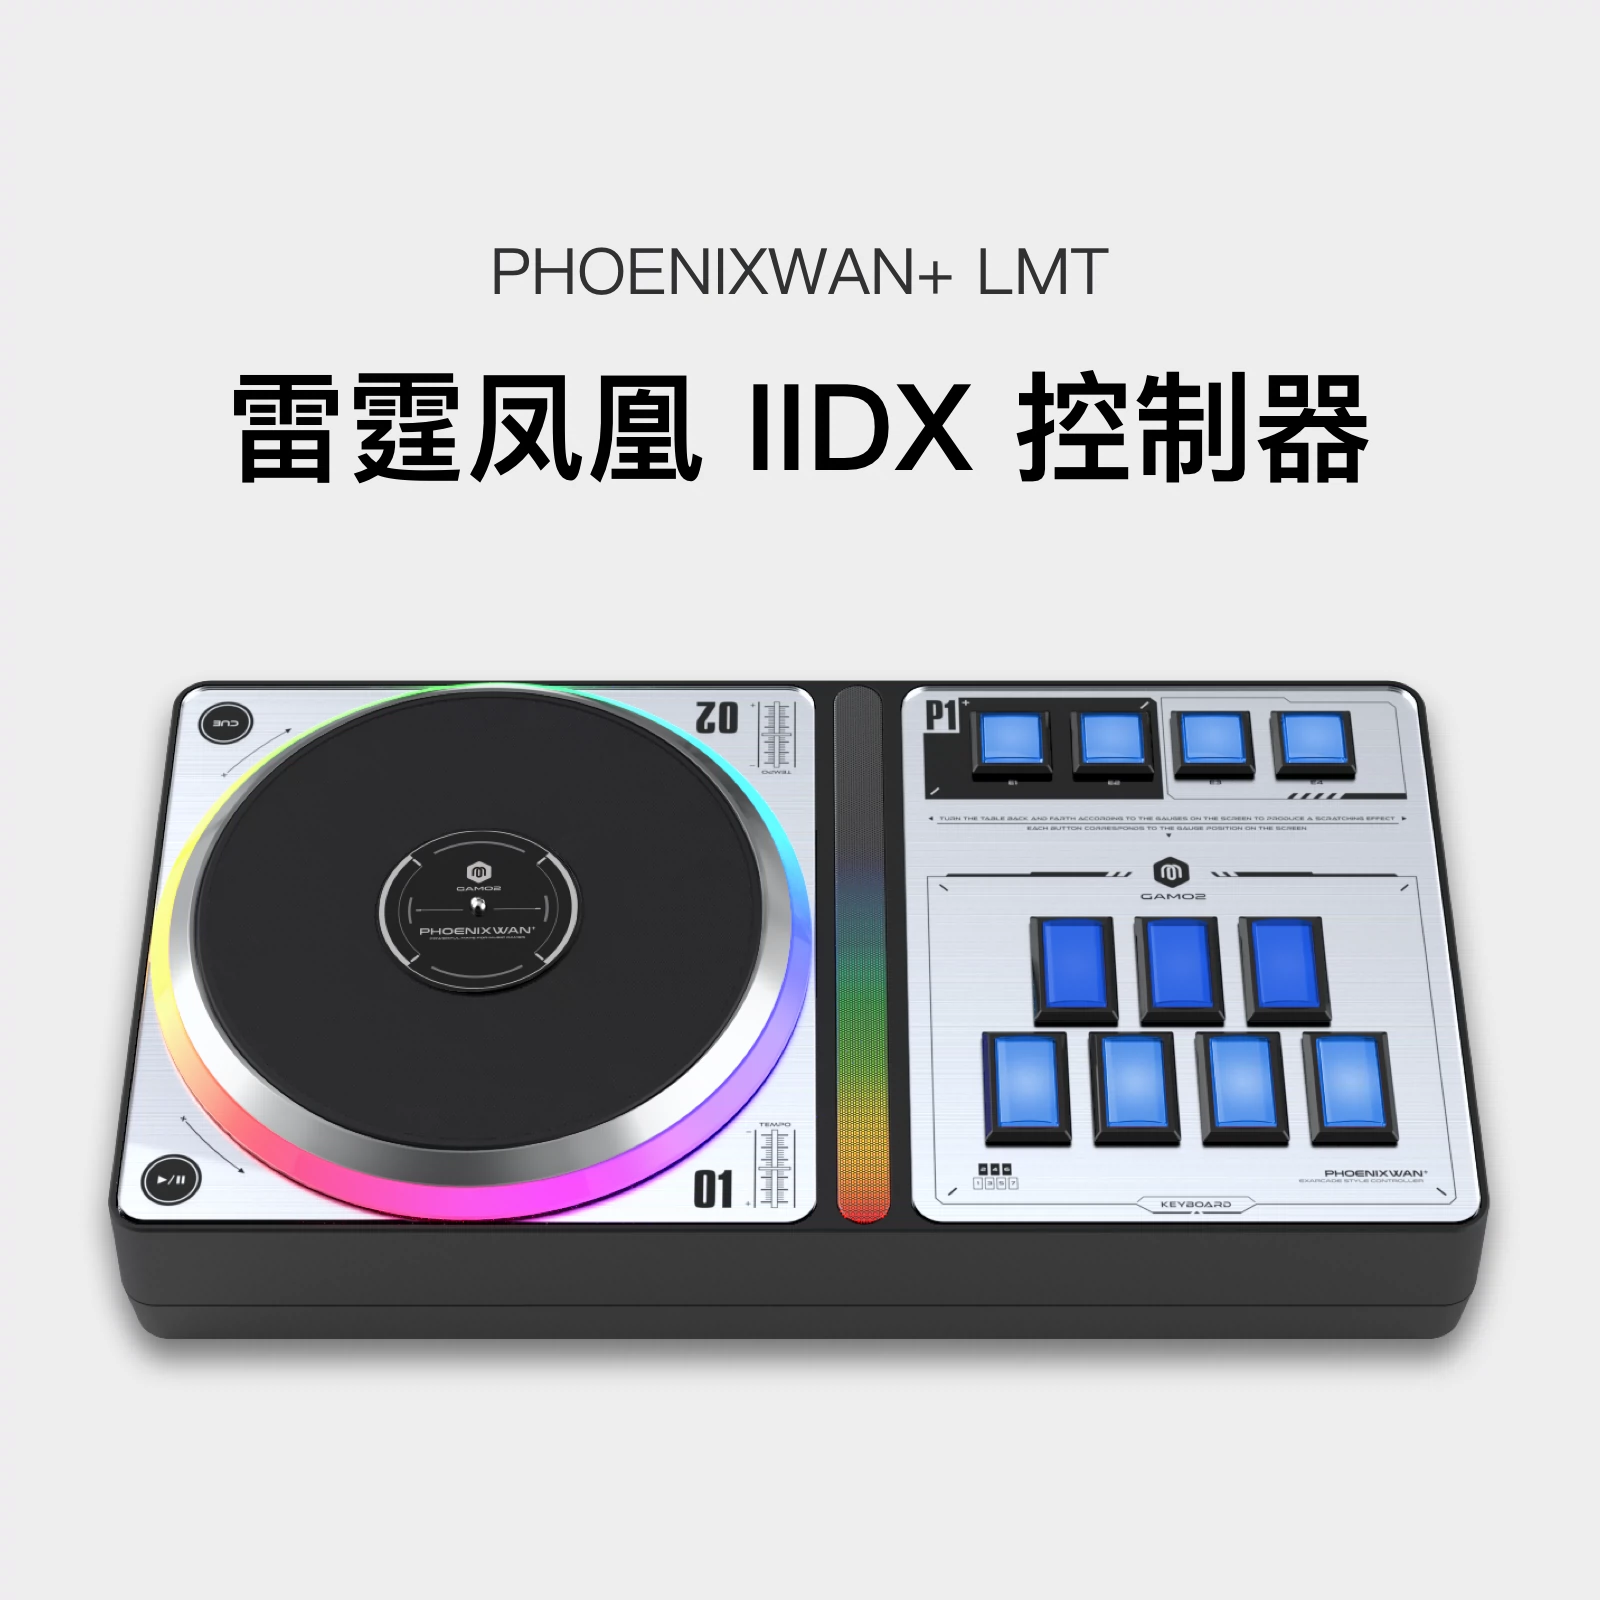 Phoenix wan 旧型 ビートマニア iidx コントローラ 静音化 - テレビゲーム